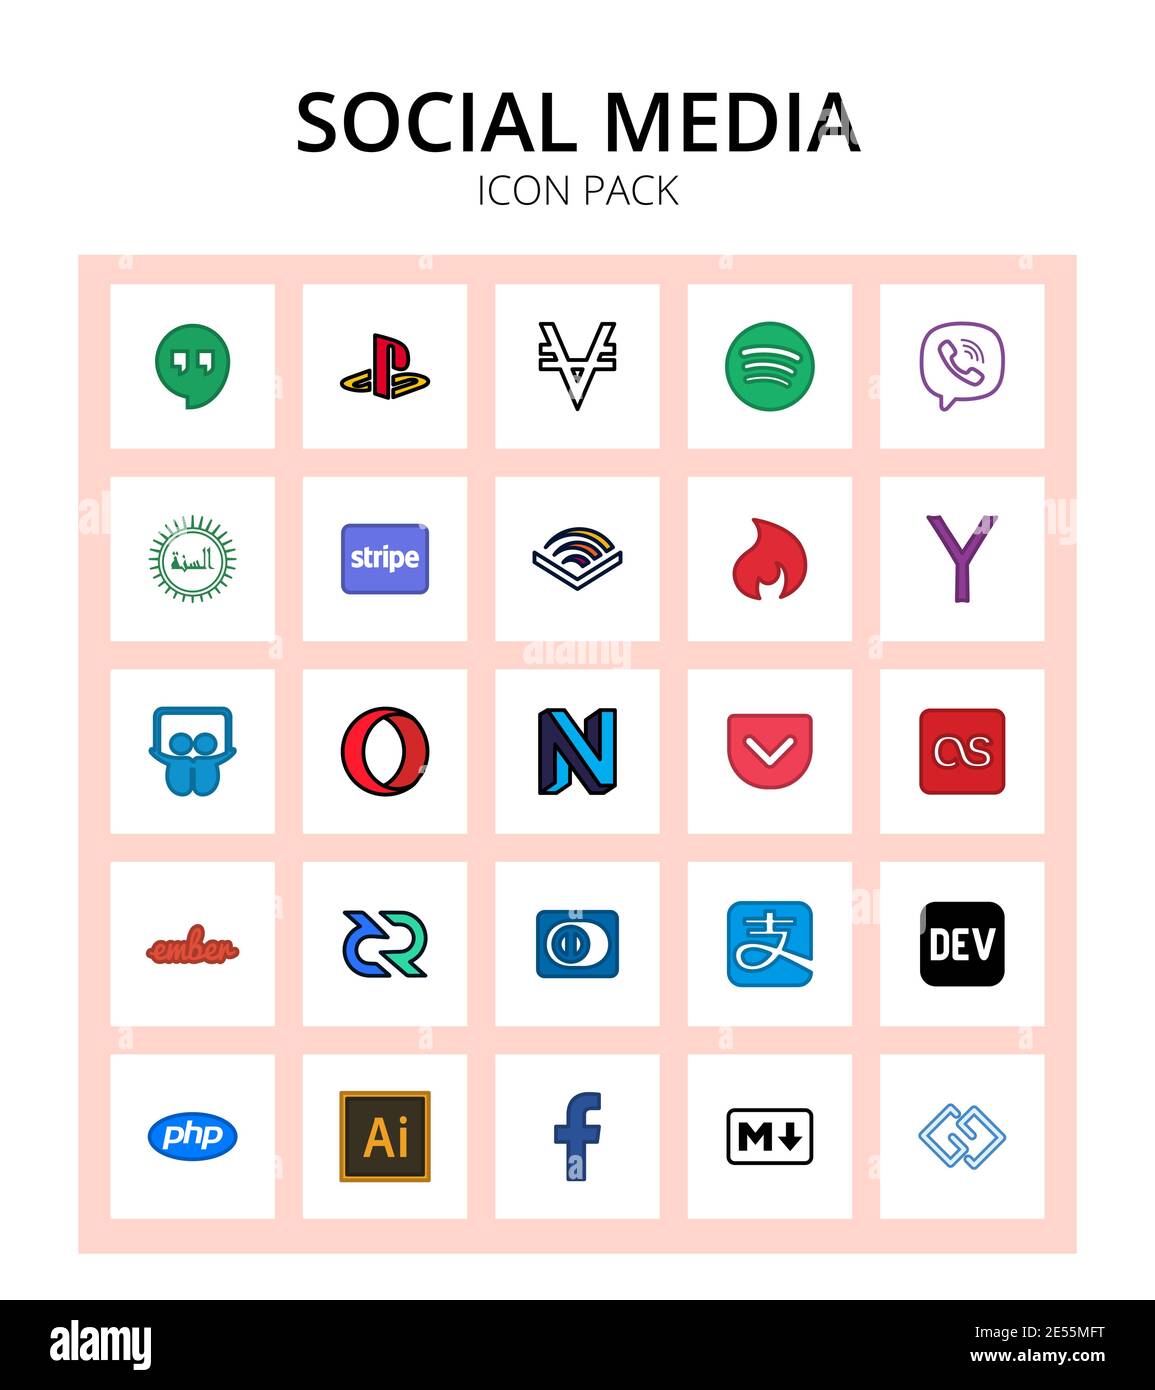 SocialMedia ember, lastfm, audible, pocket, opera Editable Vector Design Elements Stock Vector